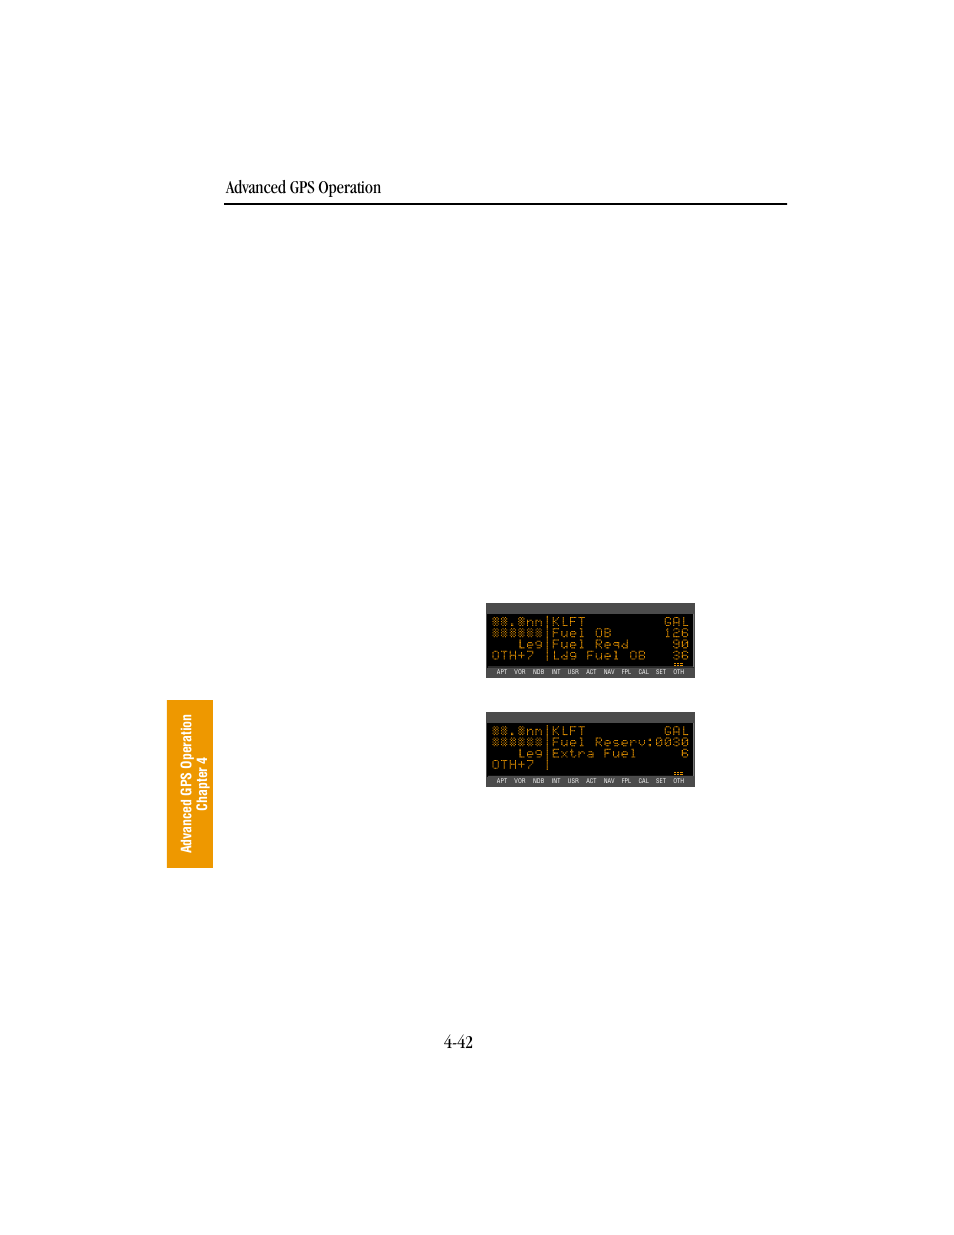 Advanced gps operation 4-42 | BendixKing KLN 89B - Pilots Guide User Manual | Page 153 / 246